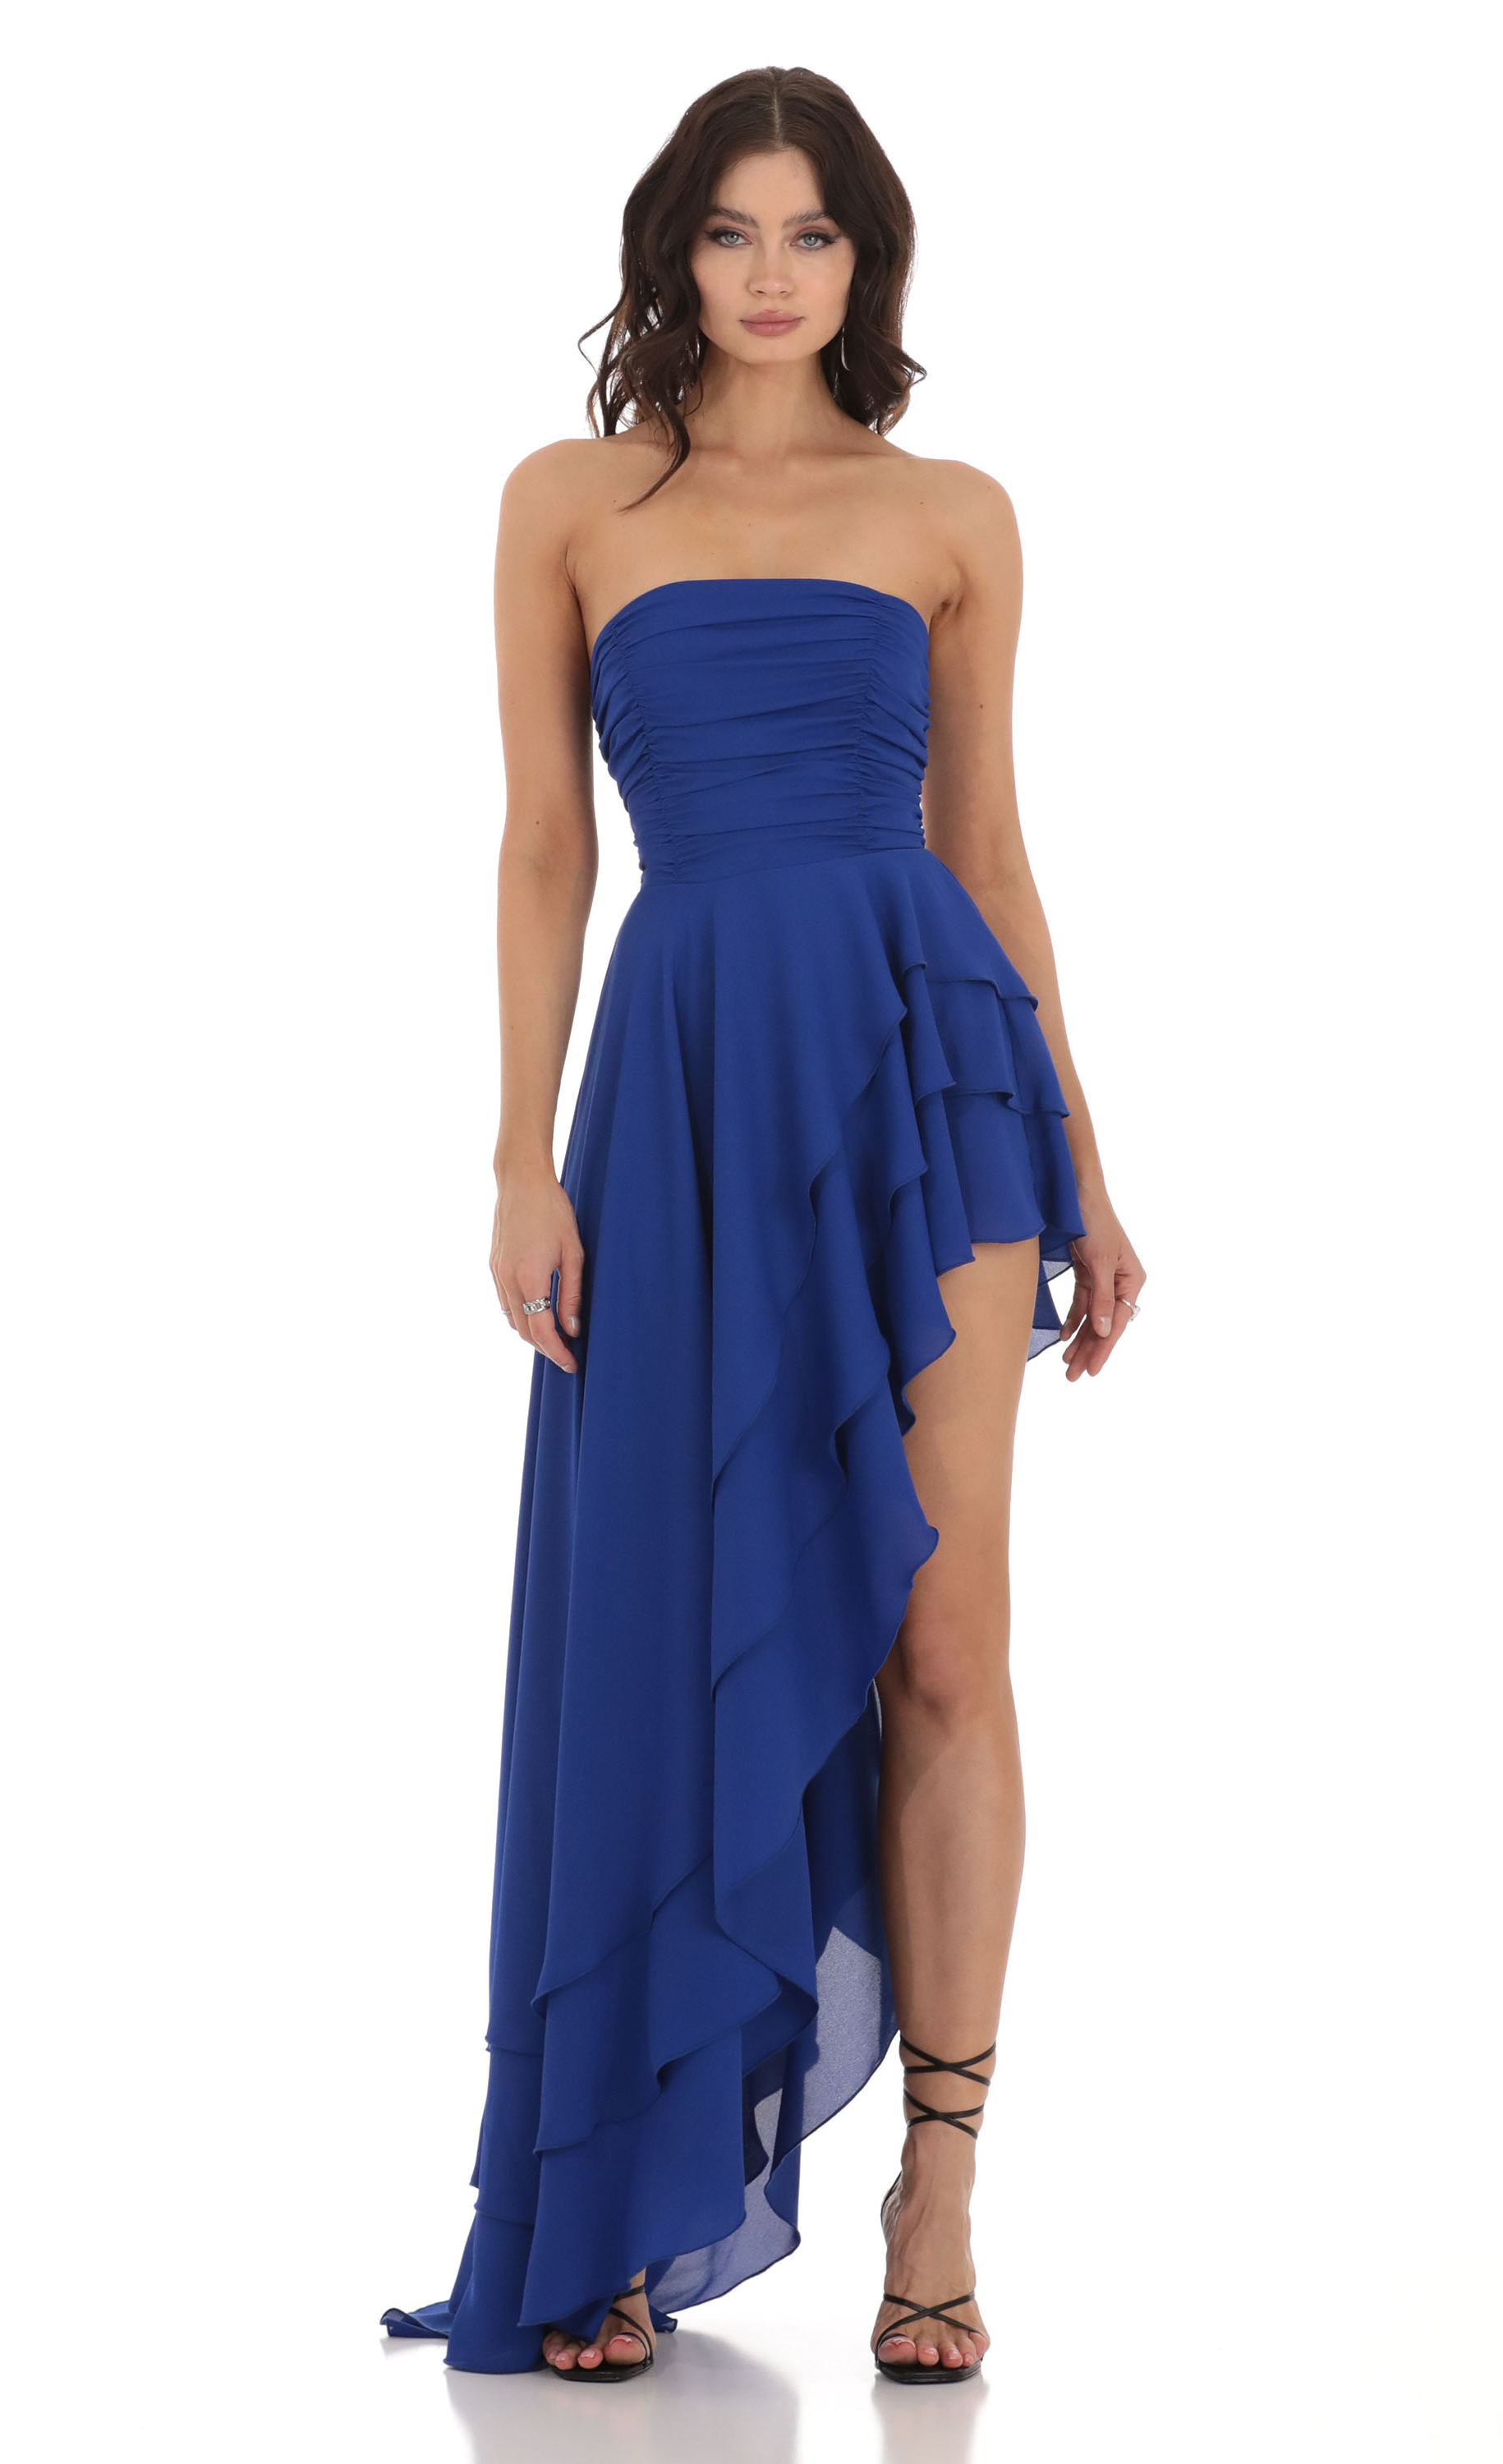 Asymmetrical Corset Dress in Blue